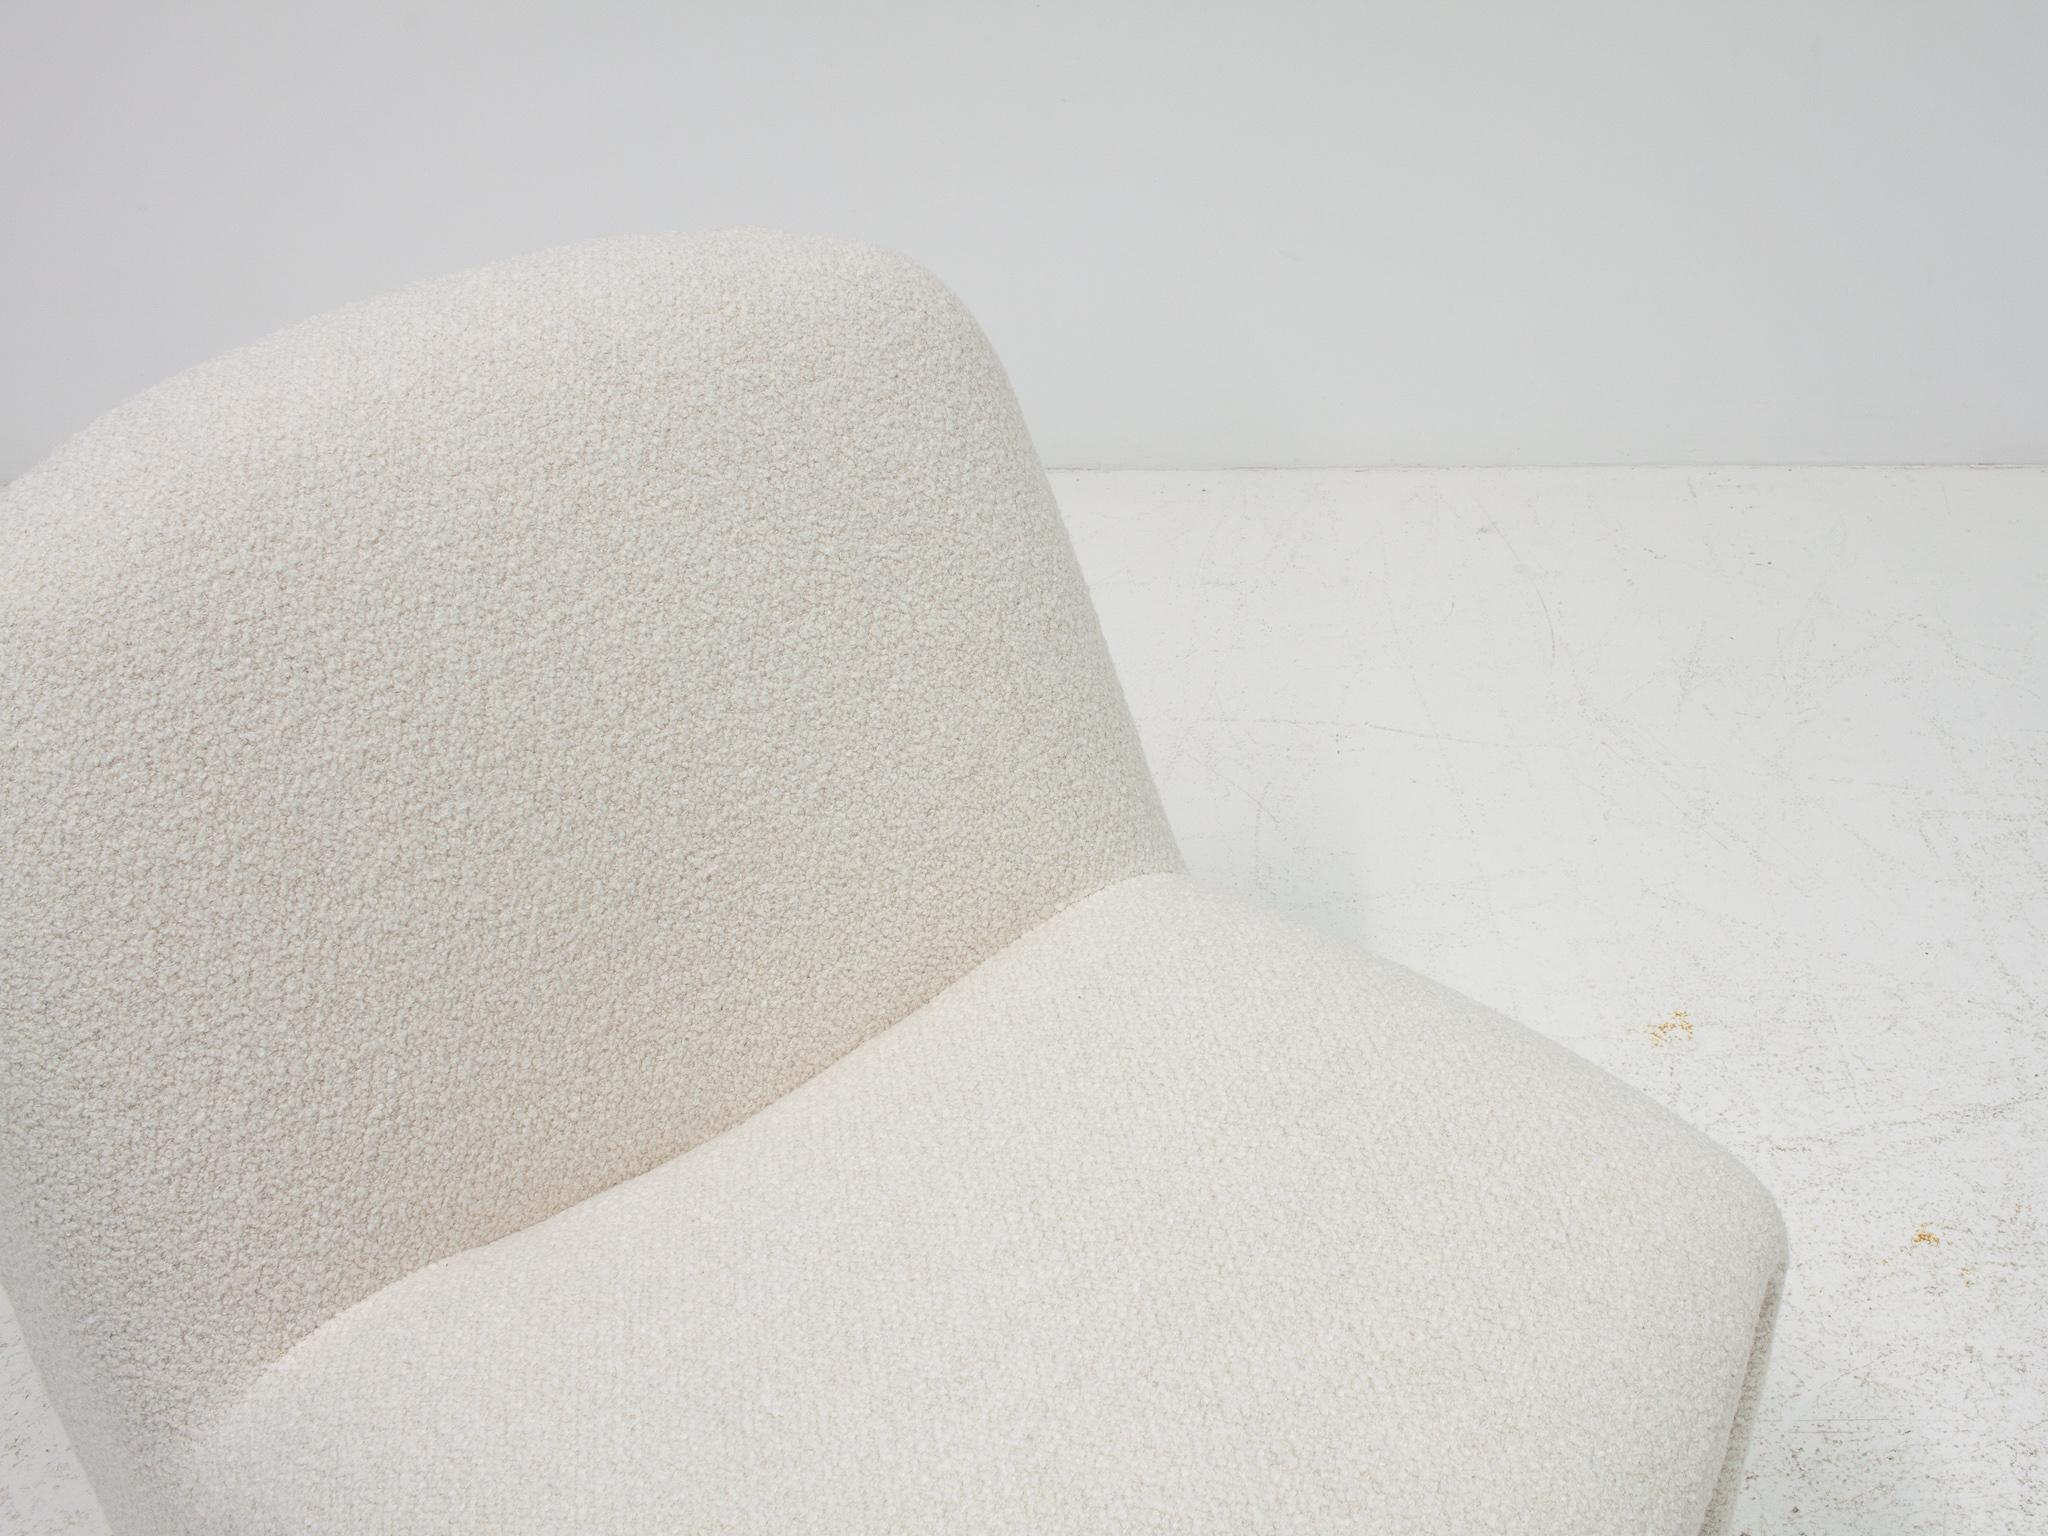 Giancarlo Piretti “Alky” Chairs In Yarn Collective bouclé *Customizable* 2